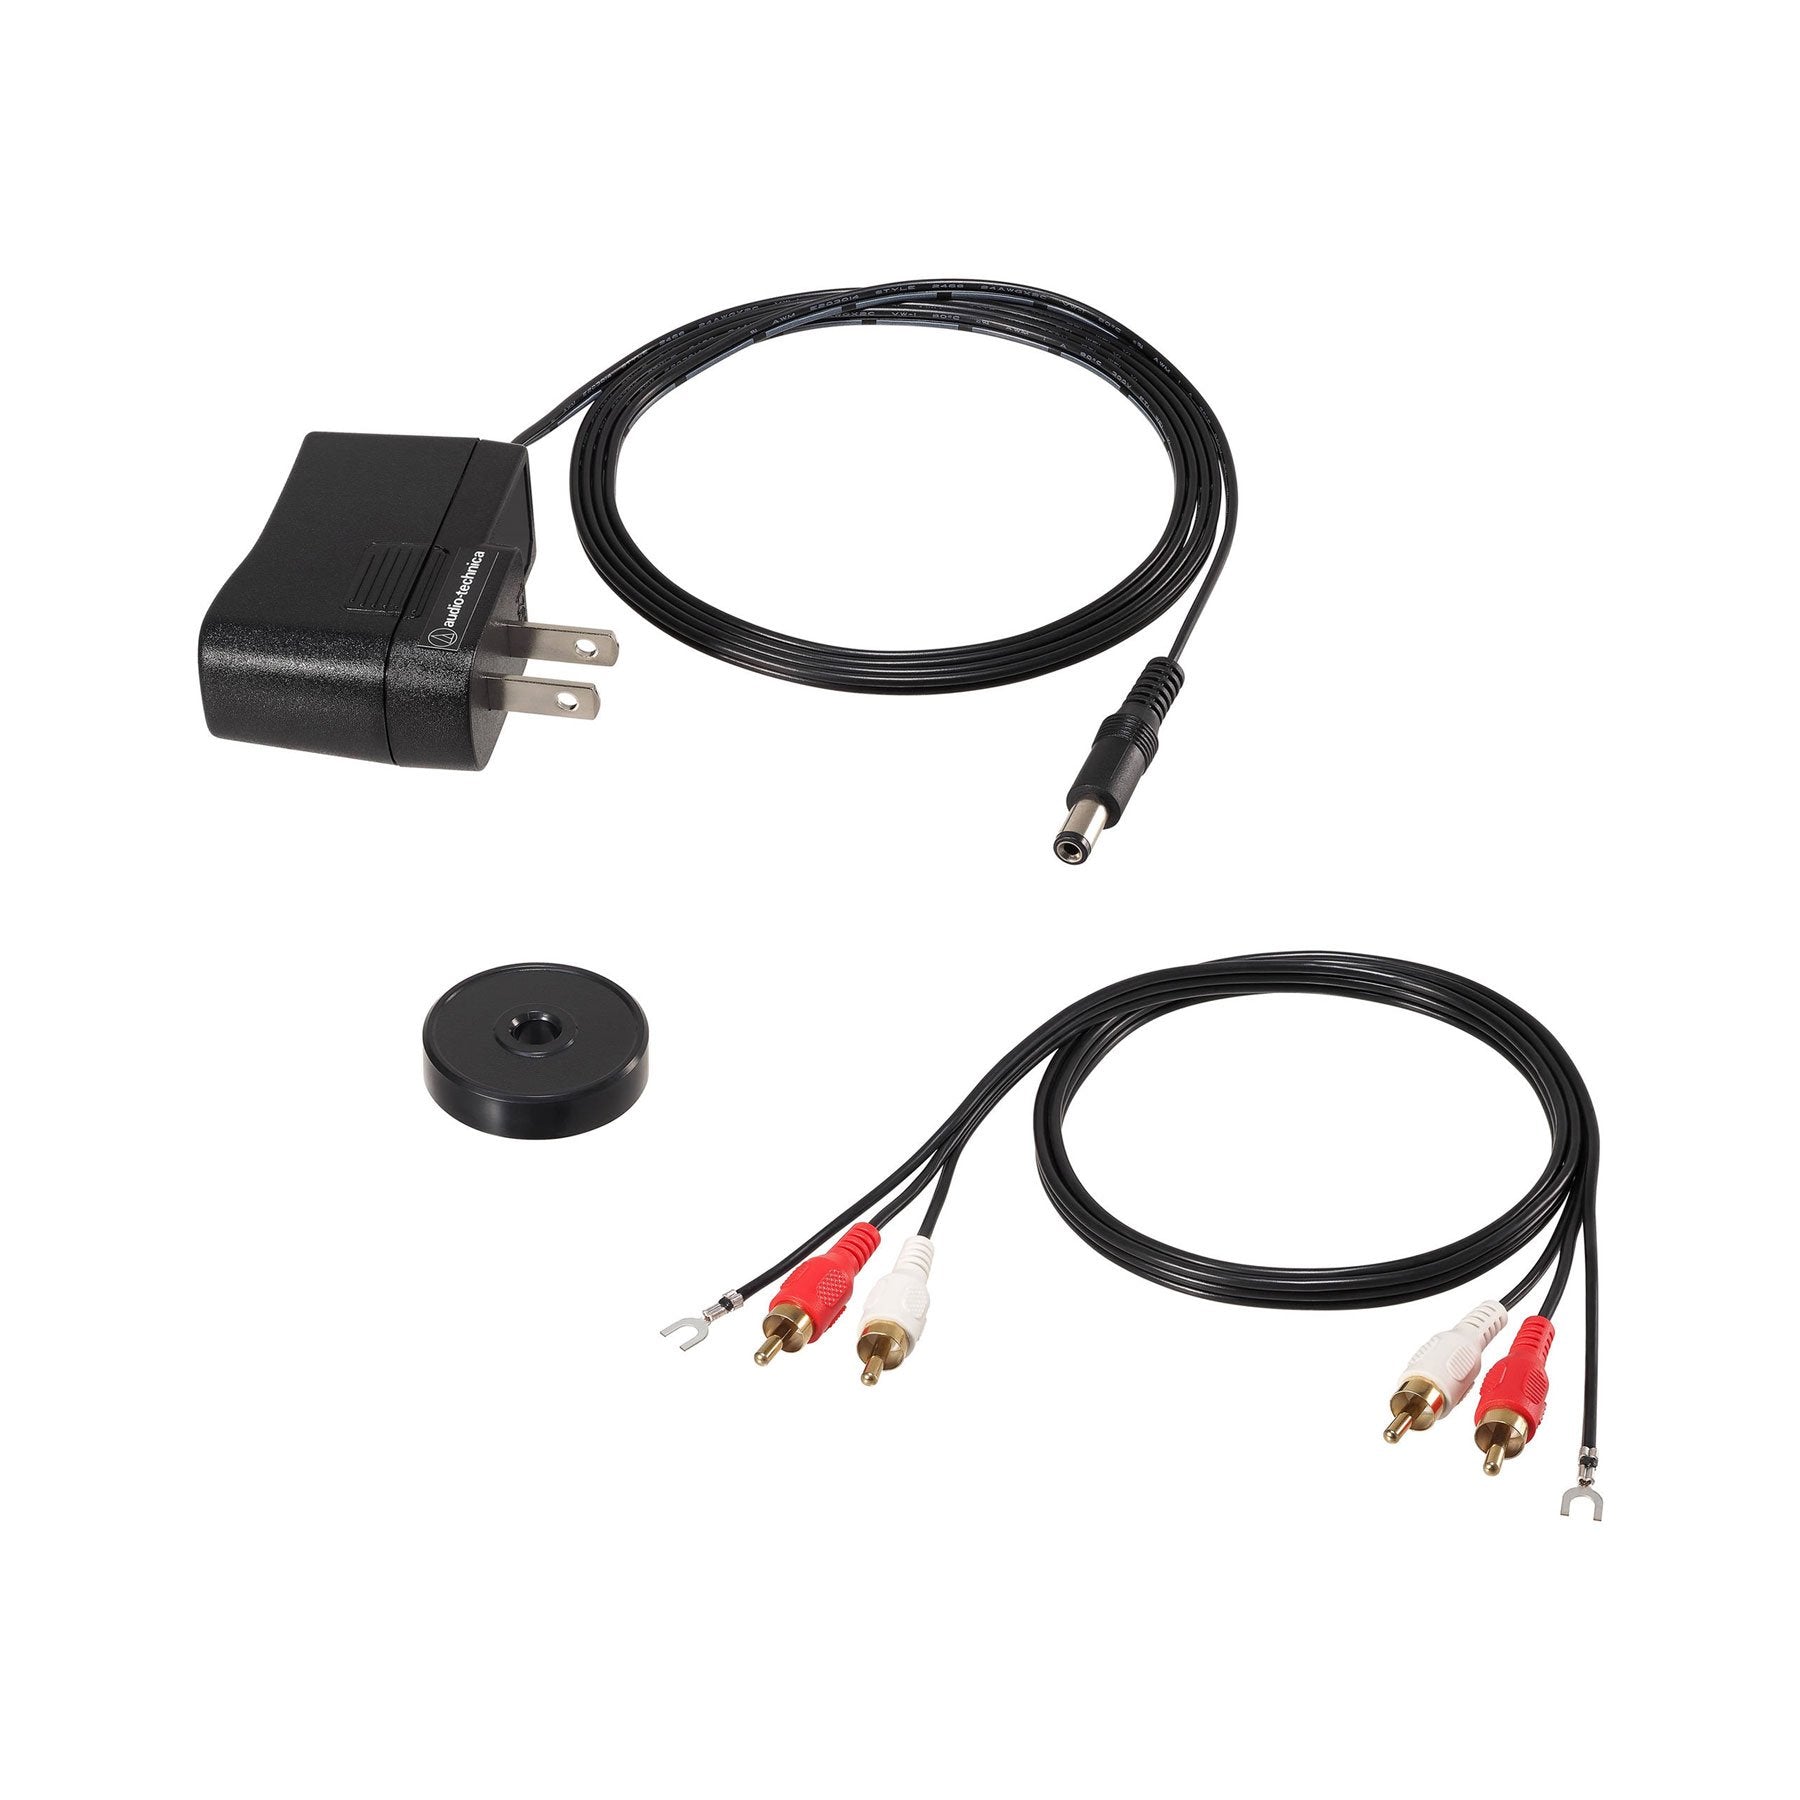 Audio-Technica: AT-LPW50PB Manual Belt-Drive Turntable